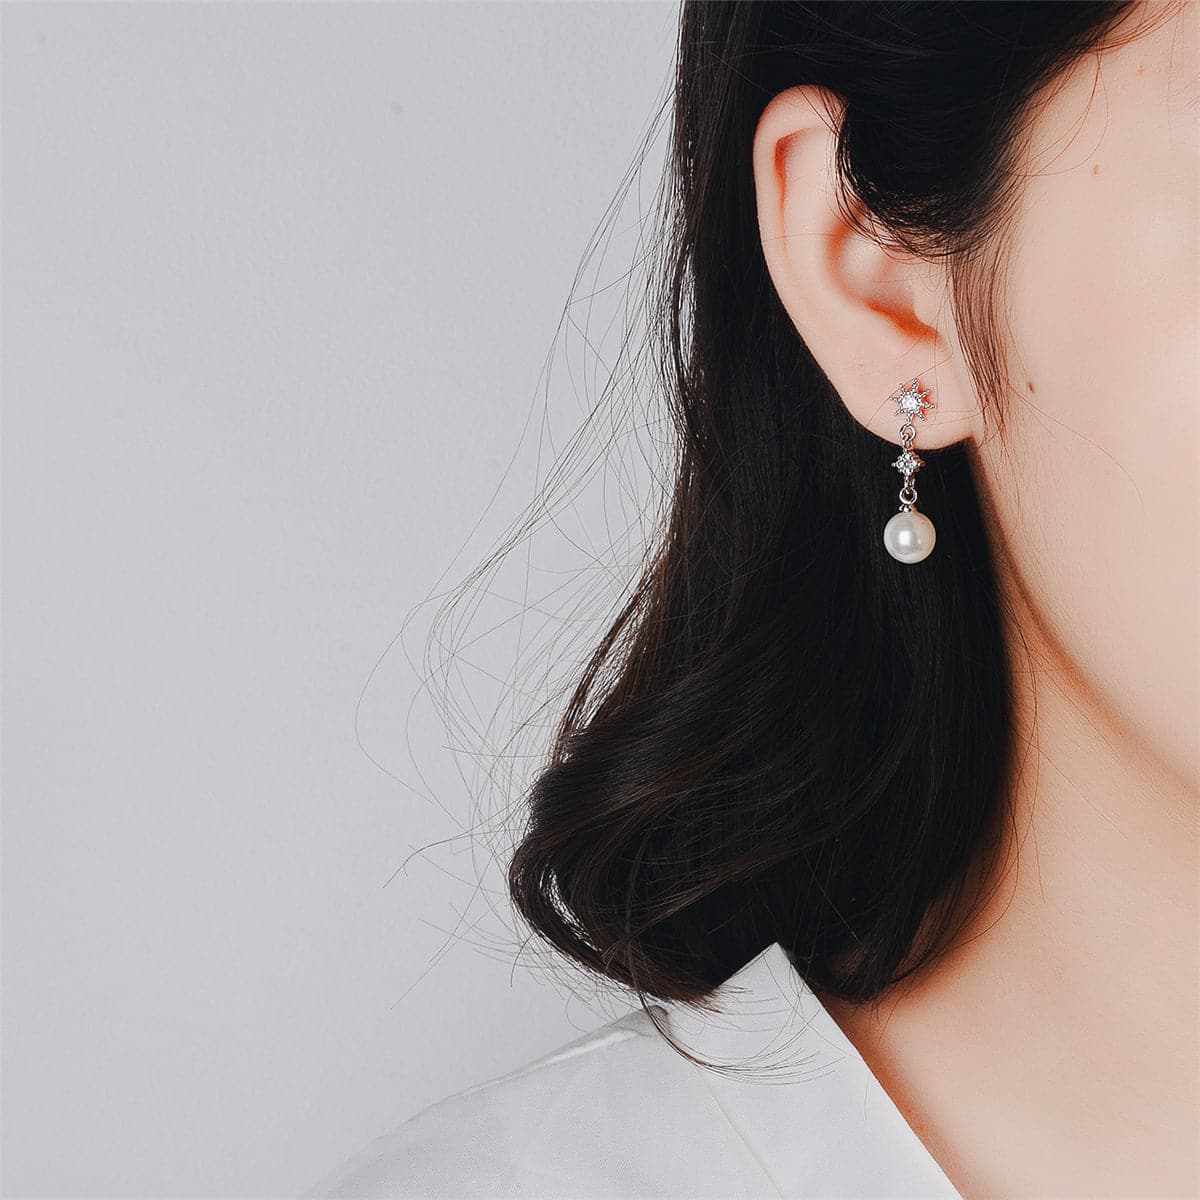 Pearl & Cubic Zirconia Silver-Plated Sun Drop Earrings